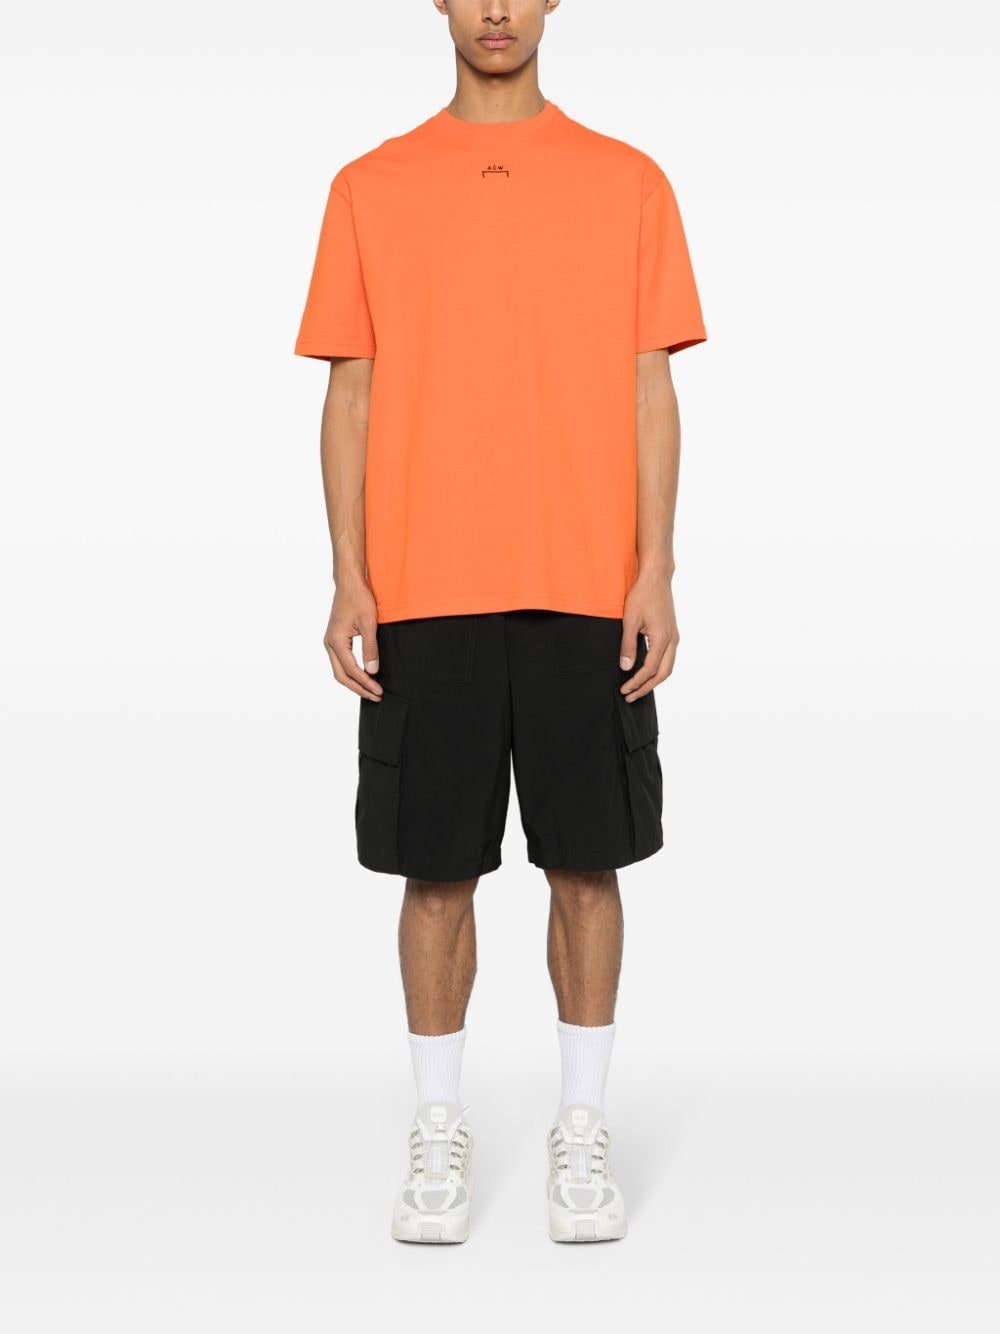 A-COLD-WALL* Katoenen T-shirt - Oranje